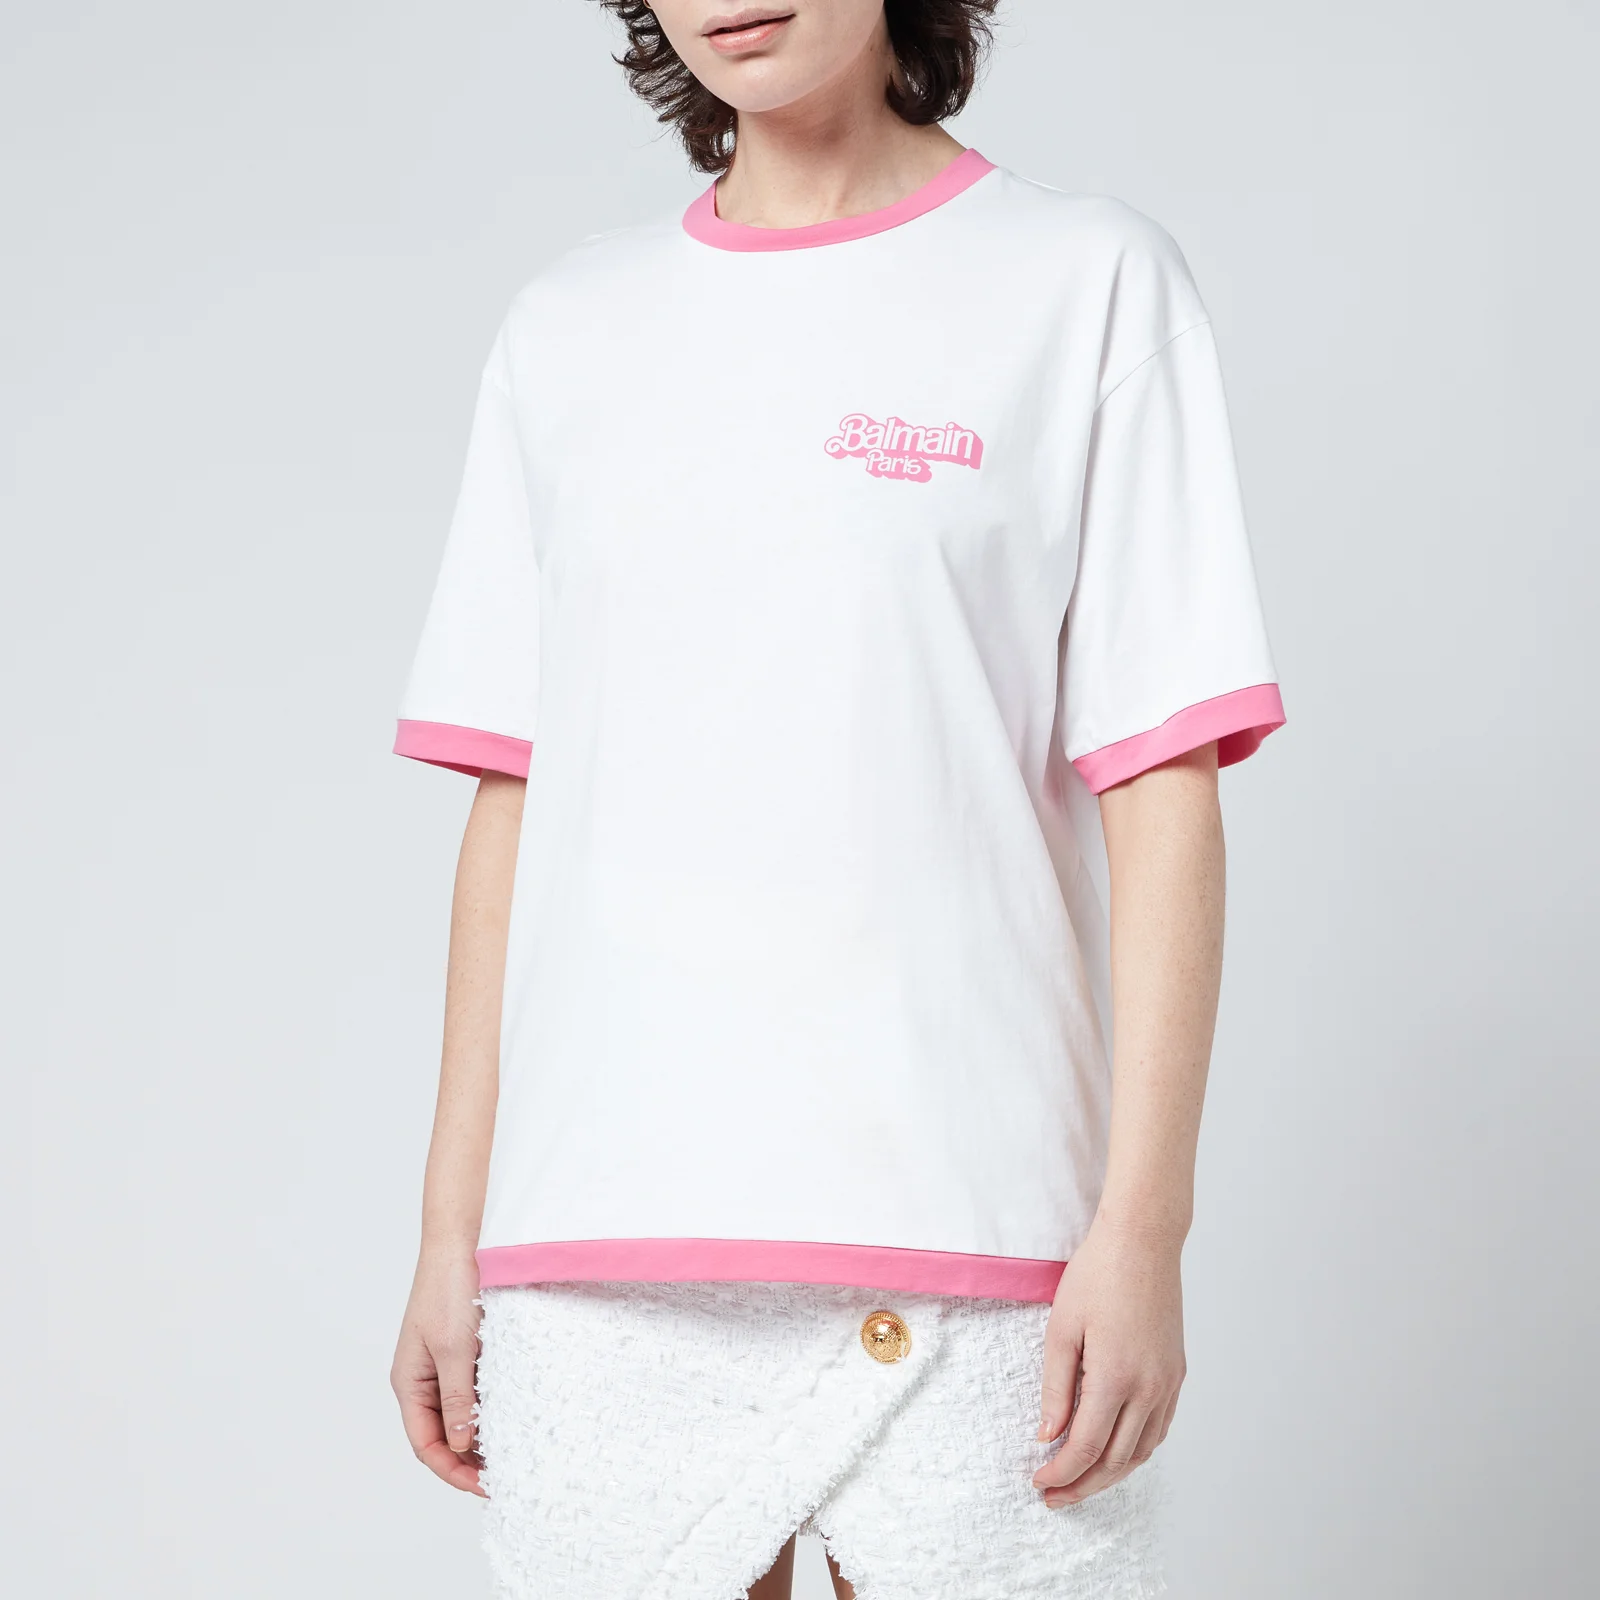 Balmain Women's Barbie Bicolour Balmain Printed T-Shirt - White Image 1